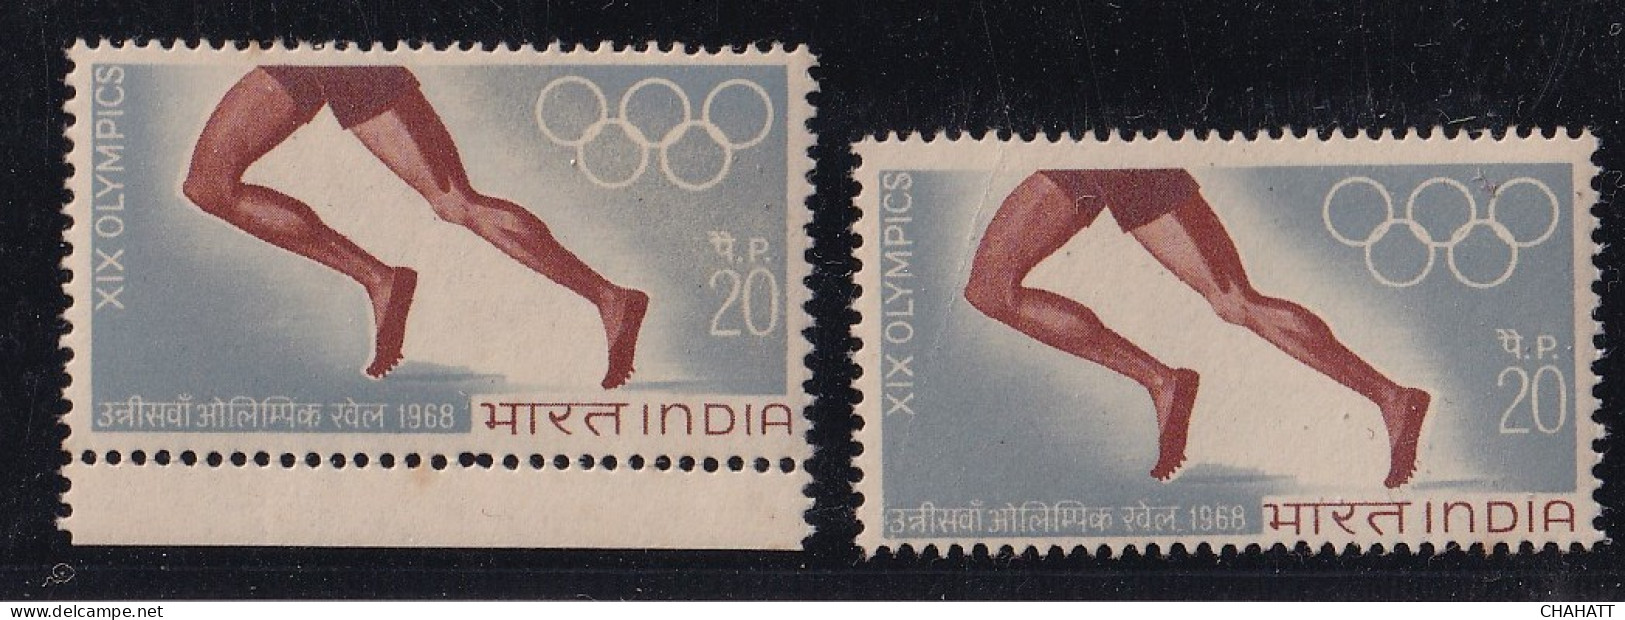 INDIA-19th OLYMPICS- 20p- ERROR-FRAME SHIFTING-MNH-IE-51 - Plaatfouten En Curiosa